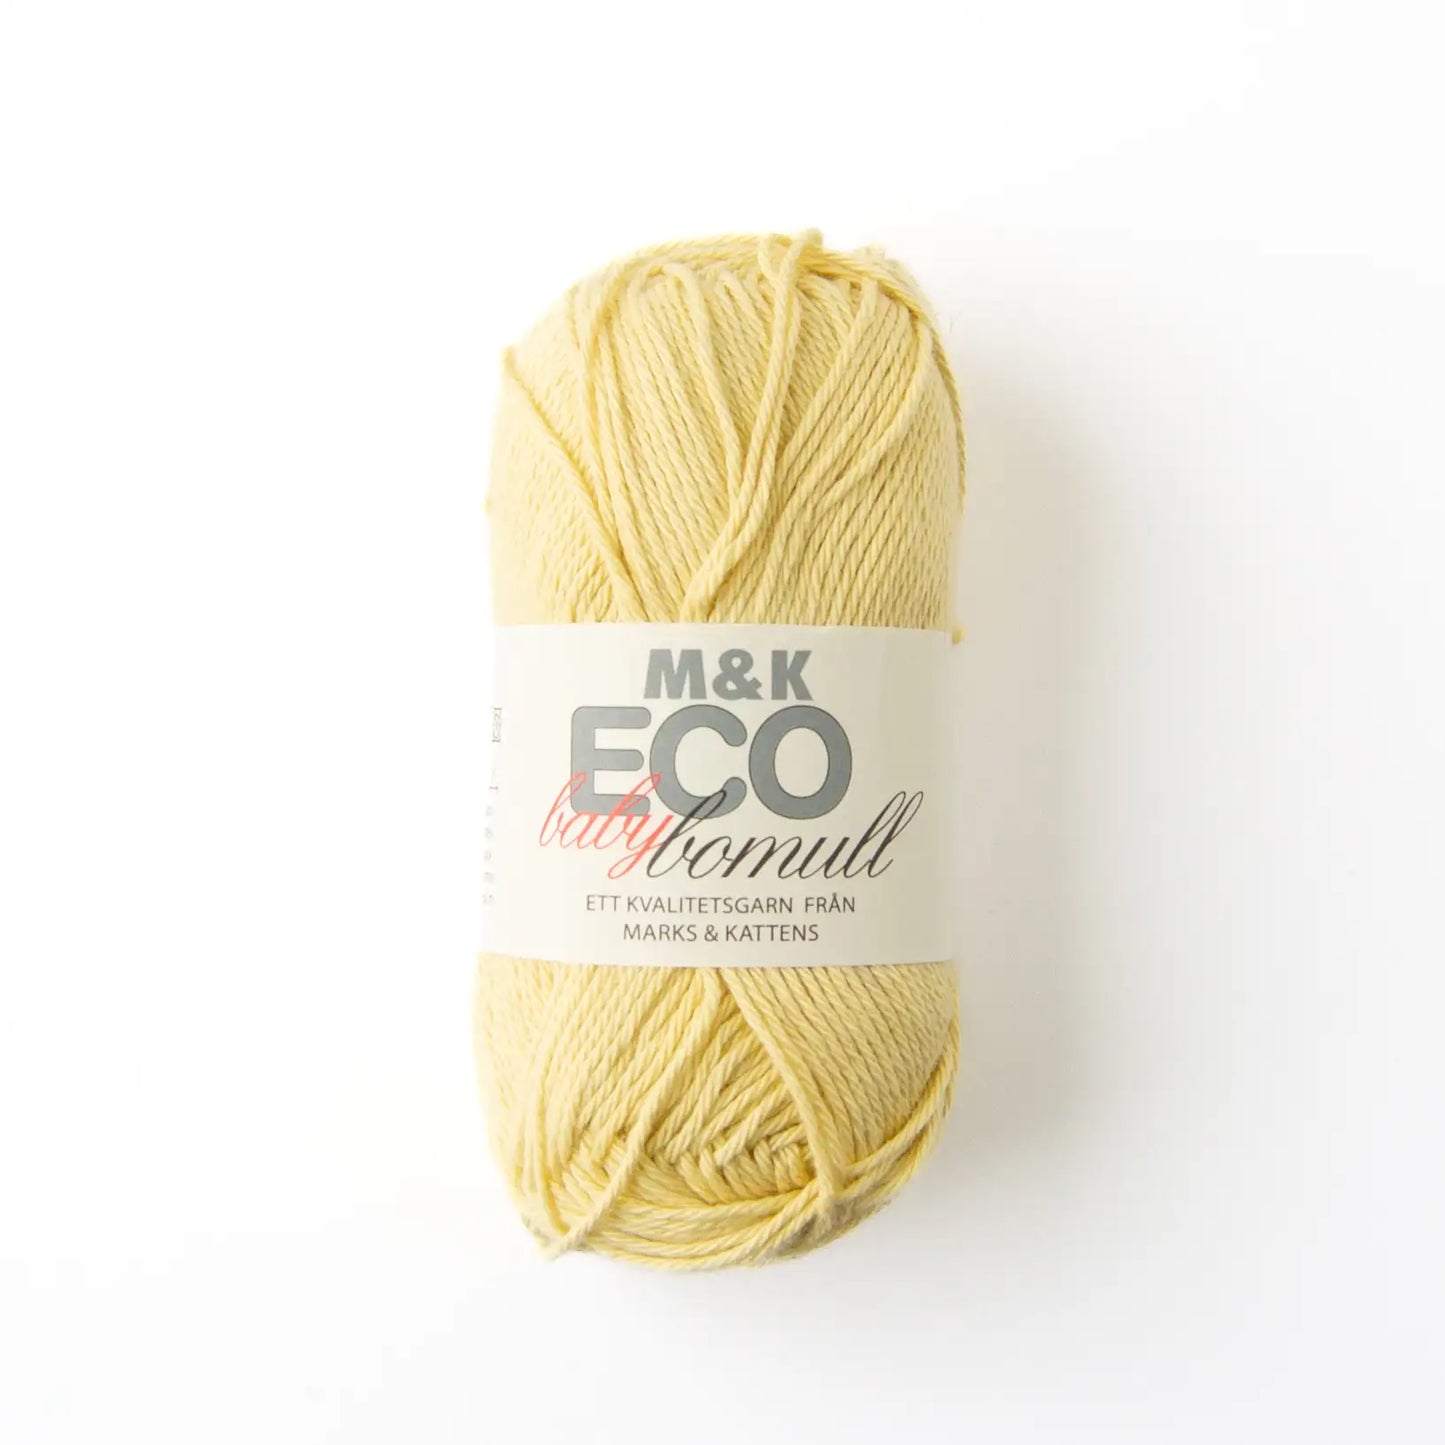 M&K Eco baby cotton | Organic cotton yarn